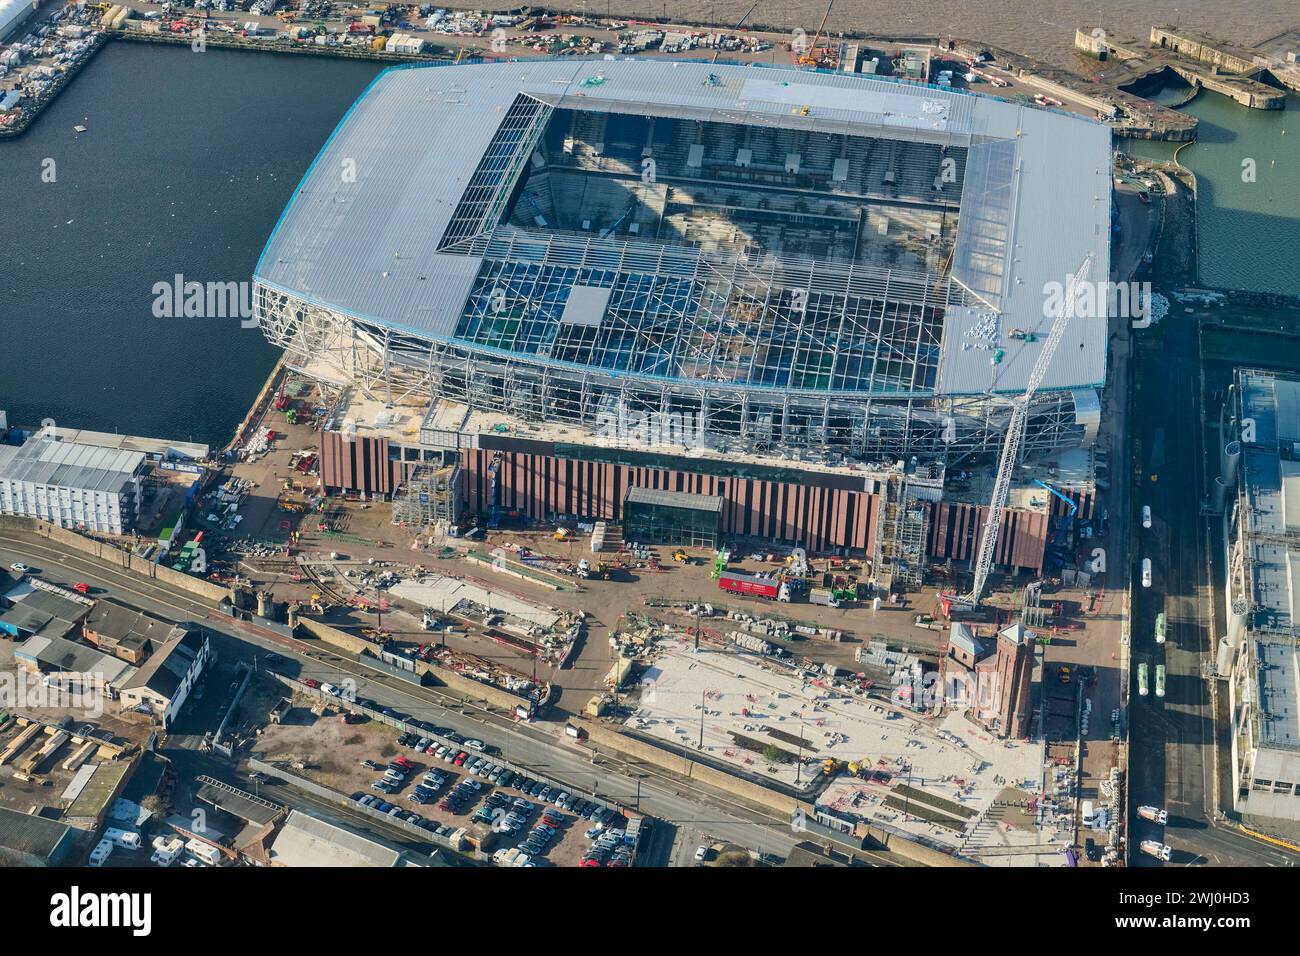 The New Everton Football Club stadium at Bramley Moore Dock, Merseyside, Liverpool, North West England, Uk, under construction Stock Photo